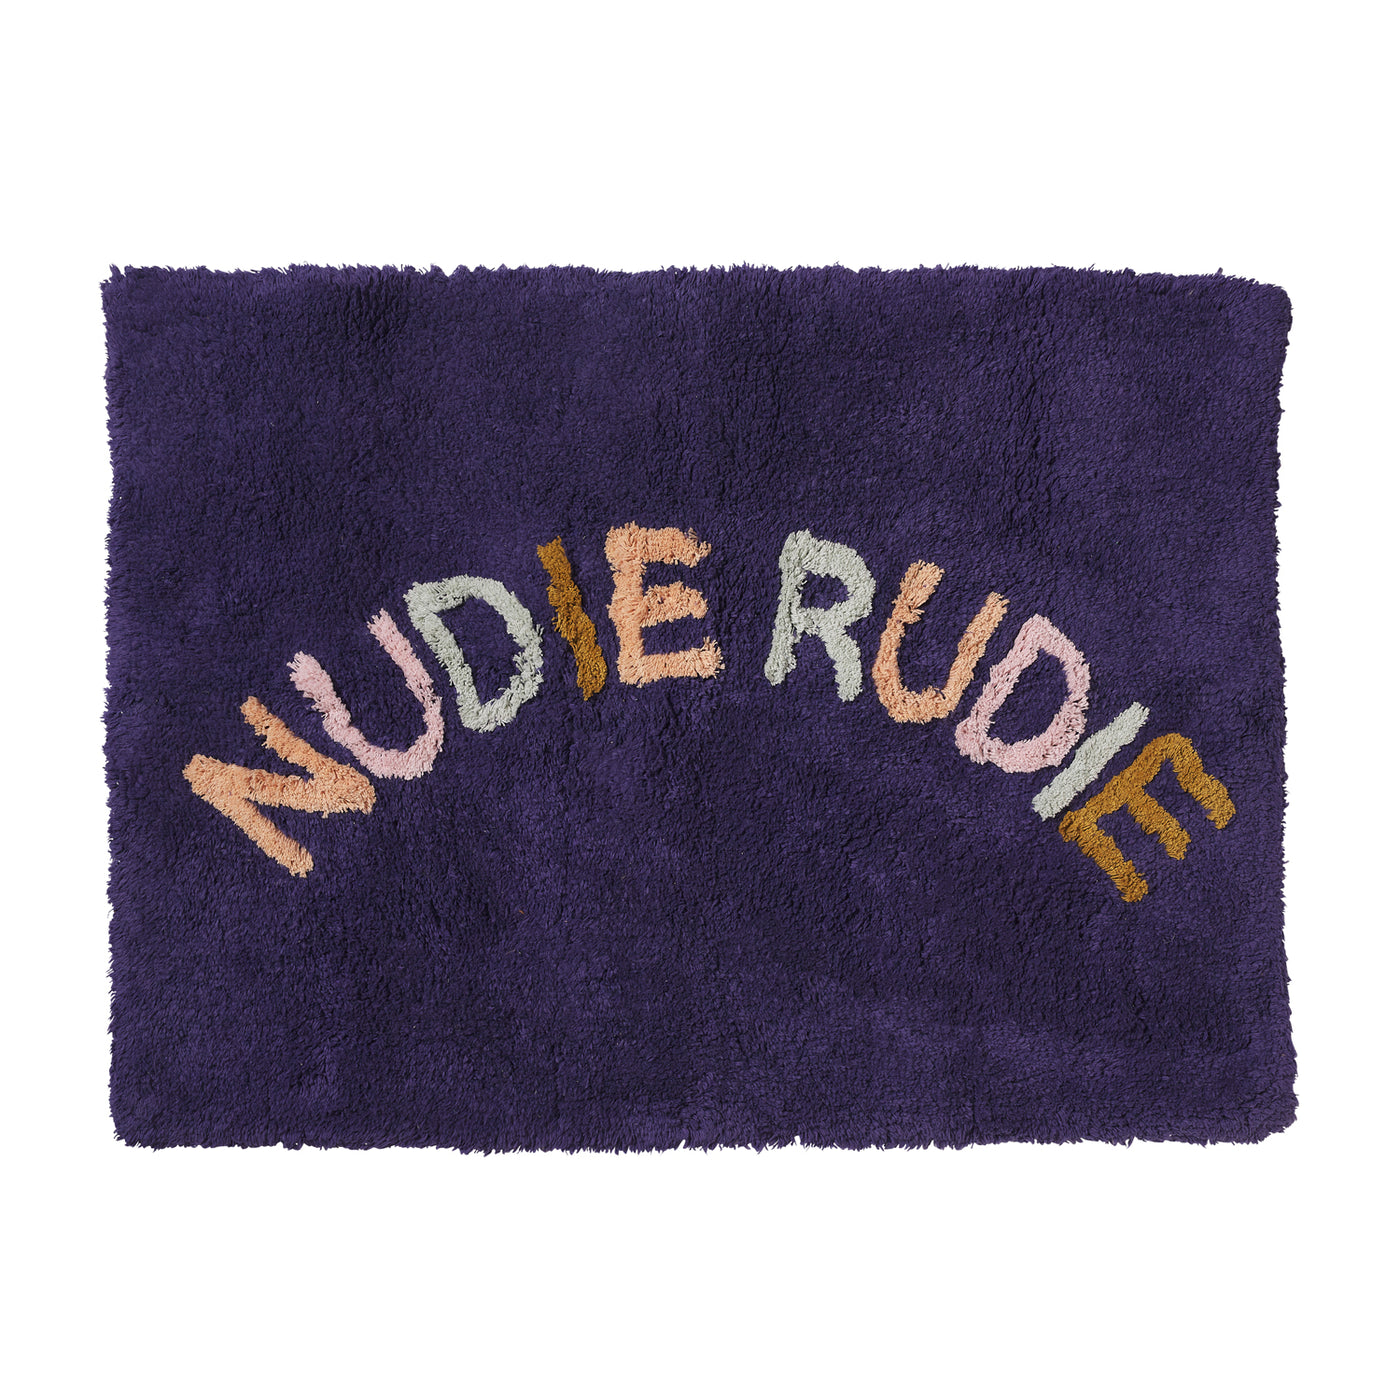 Tula hand tufted nudie bath mat multi colour